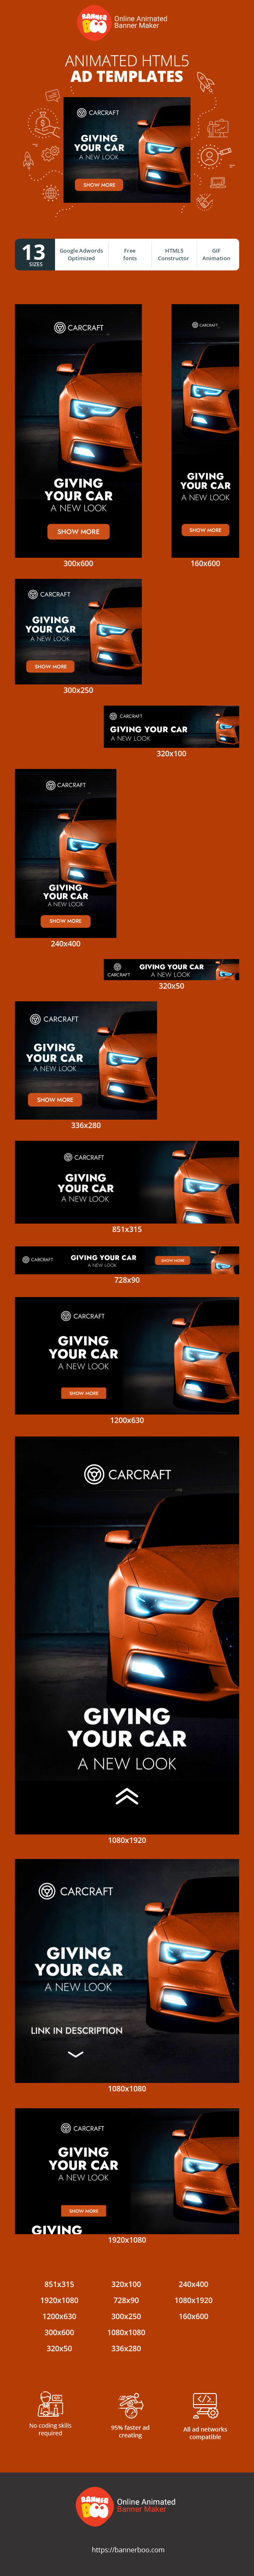 Шаблон рекламного банера — Giving Your Car A New Look — Transport